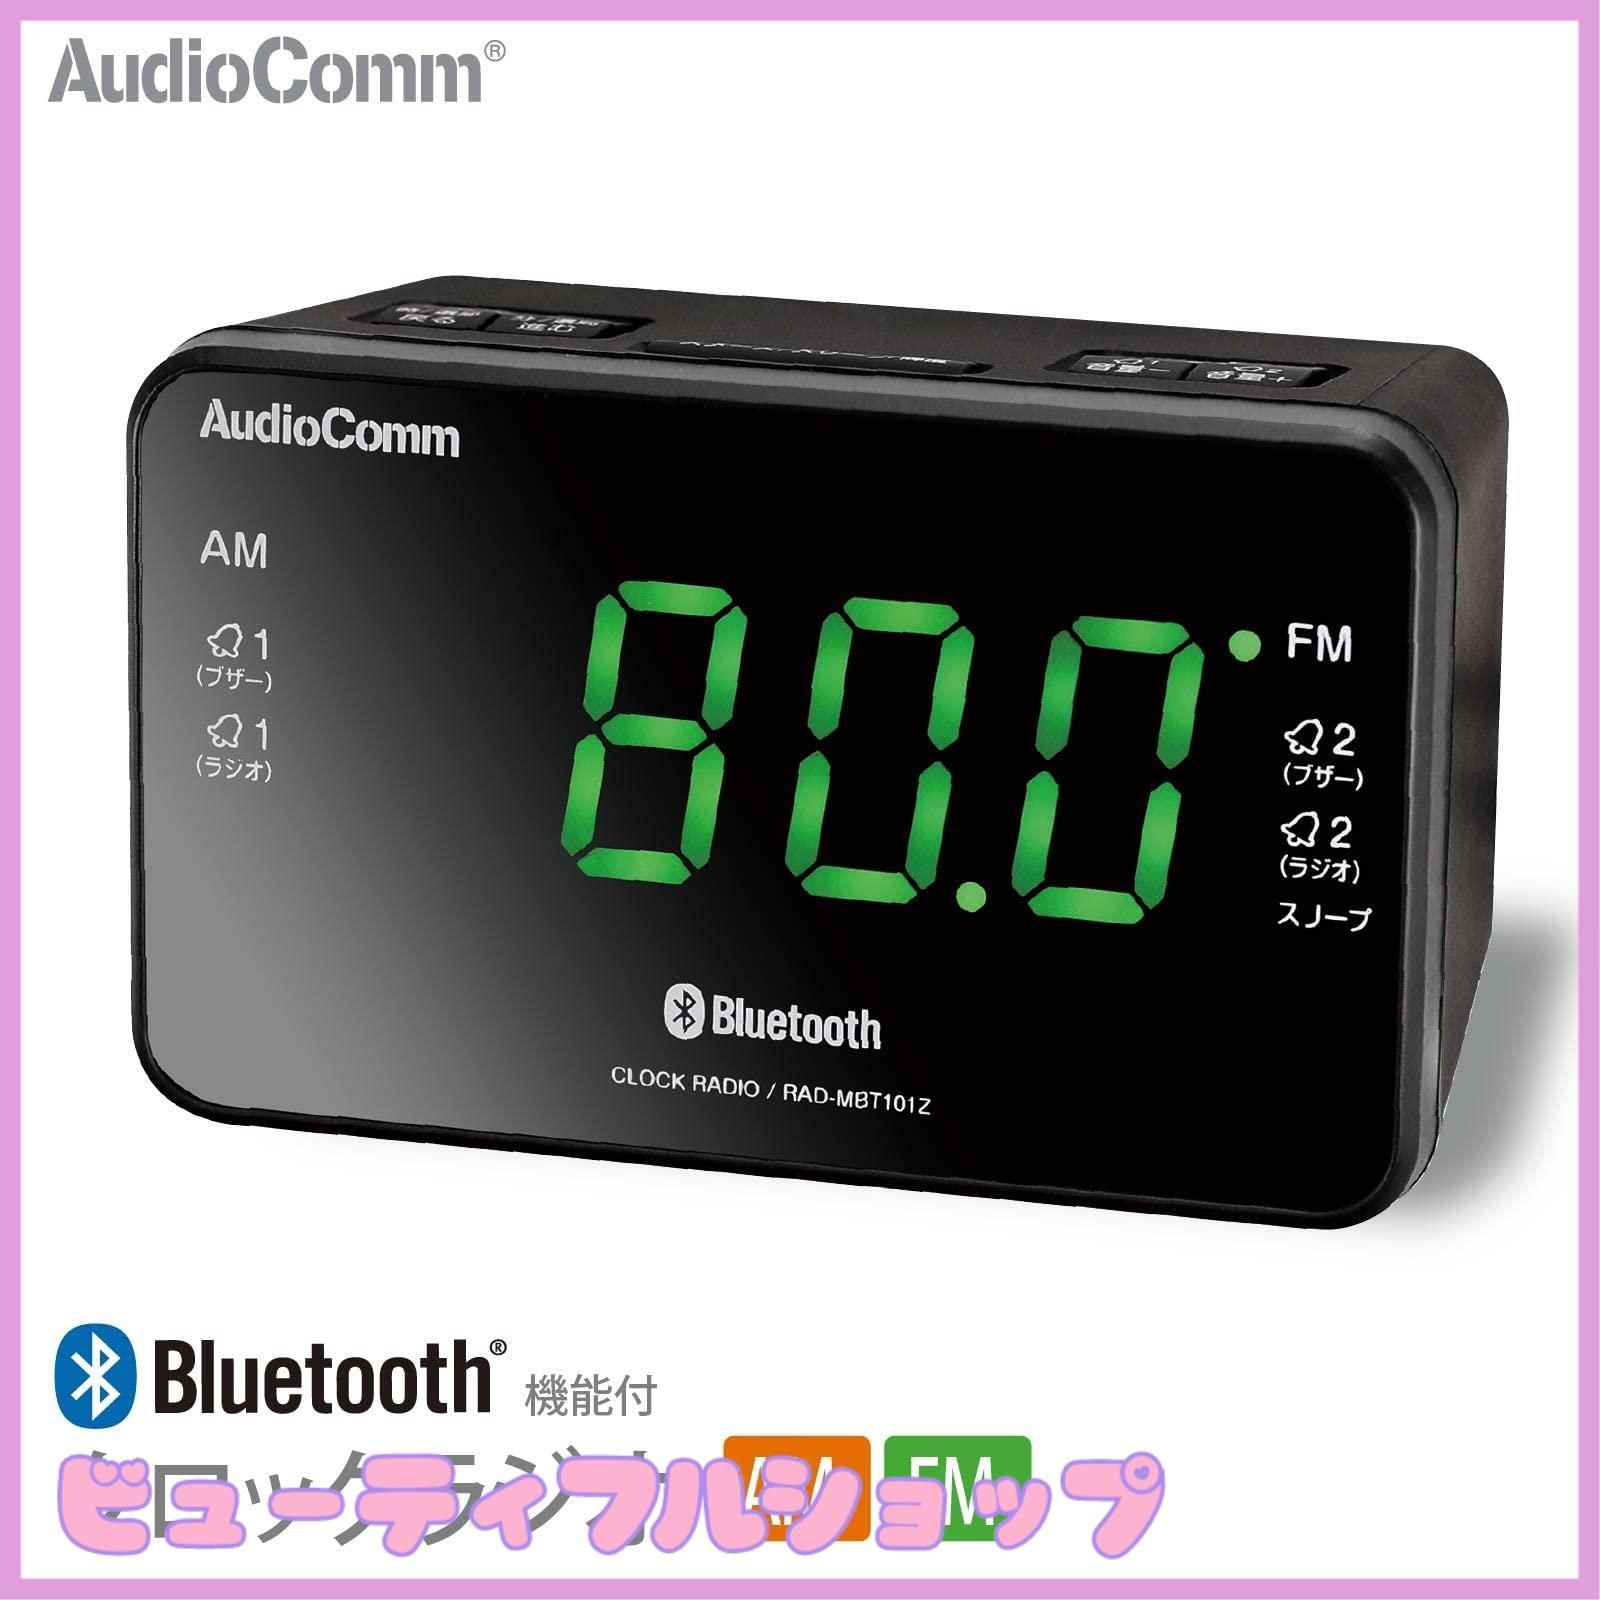 OHM ラジオ Bluetooth機能付クロックラジオ AMFM AudioComm｜RAD-MBT101Z 03-0775 オーム電機